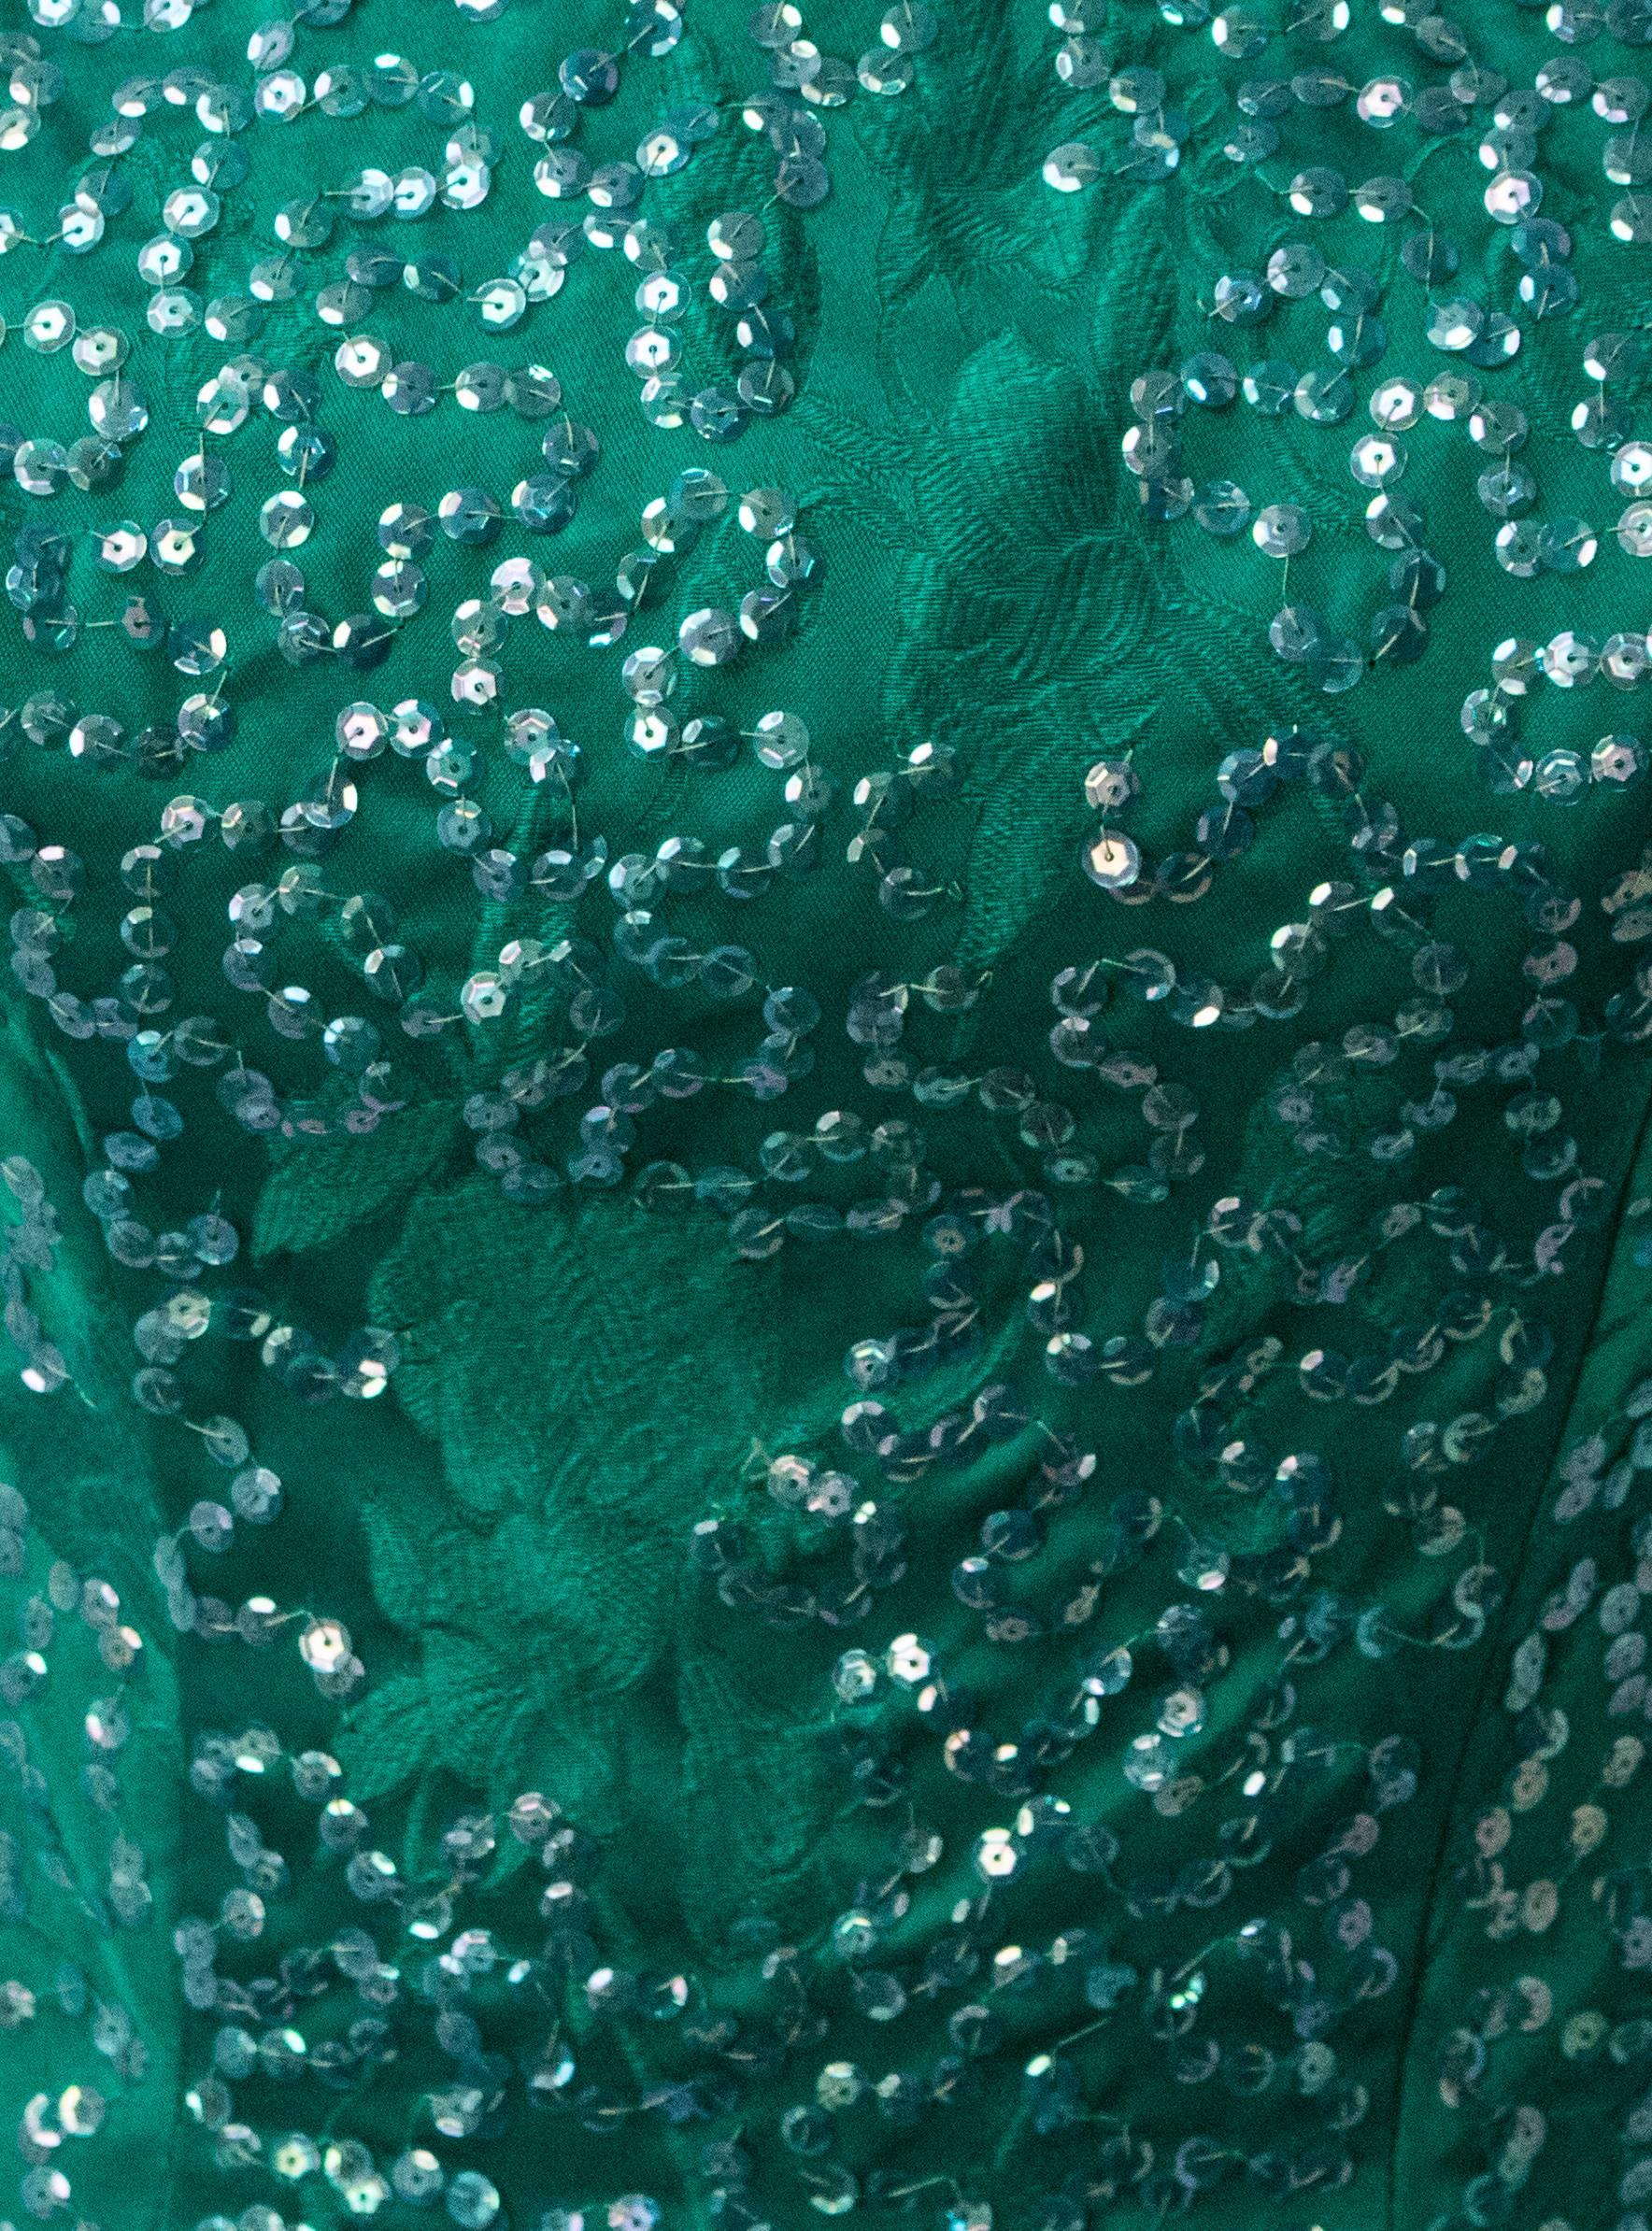 60s Green Jacquard Dress w/ Sequin Bodice. Lined bodice. Metal back zip.